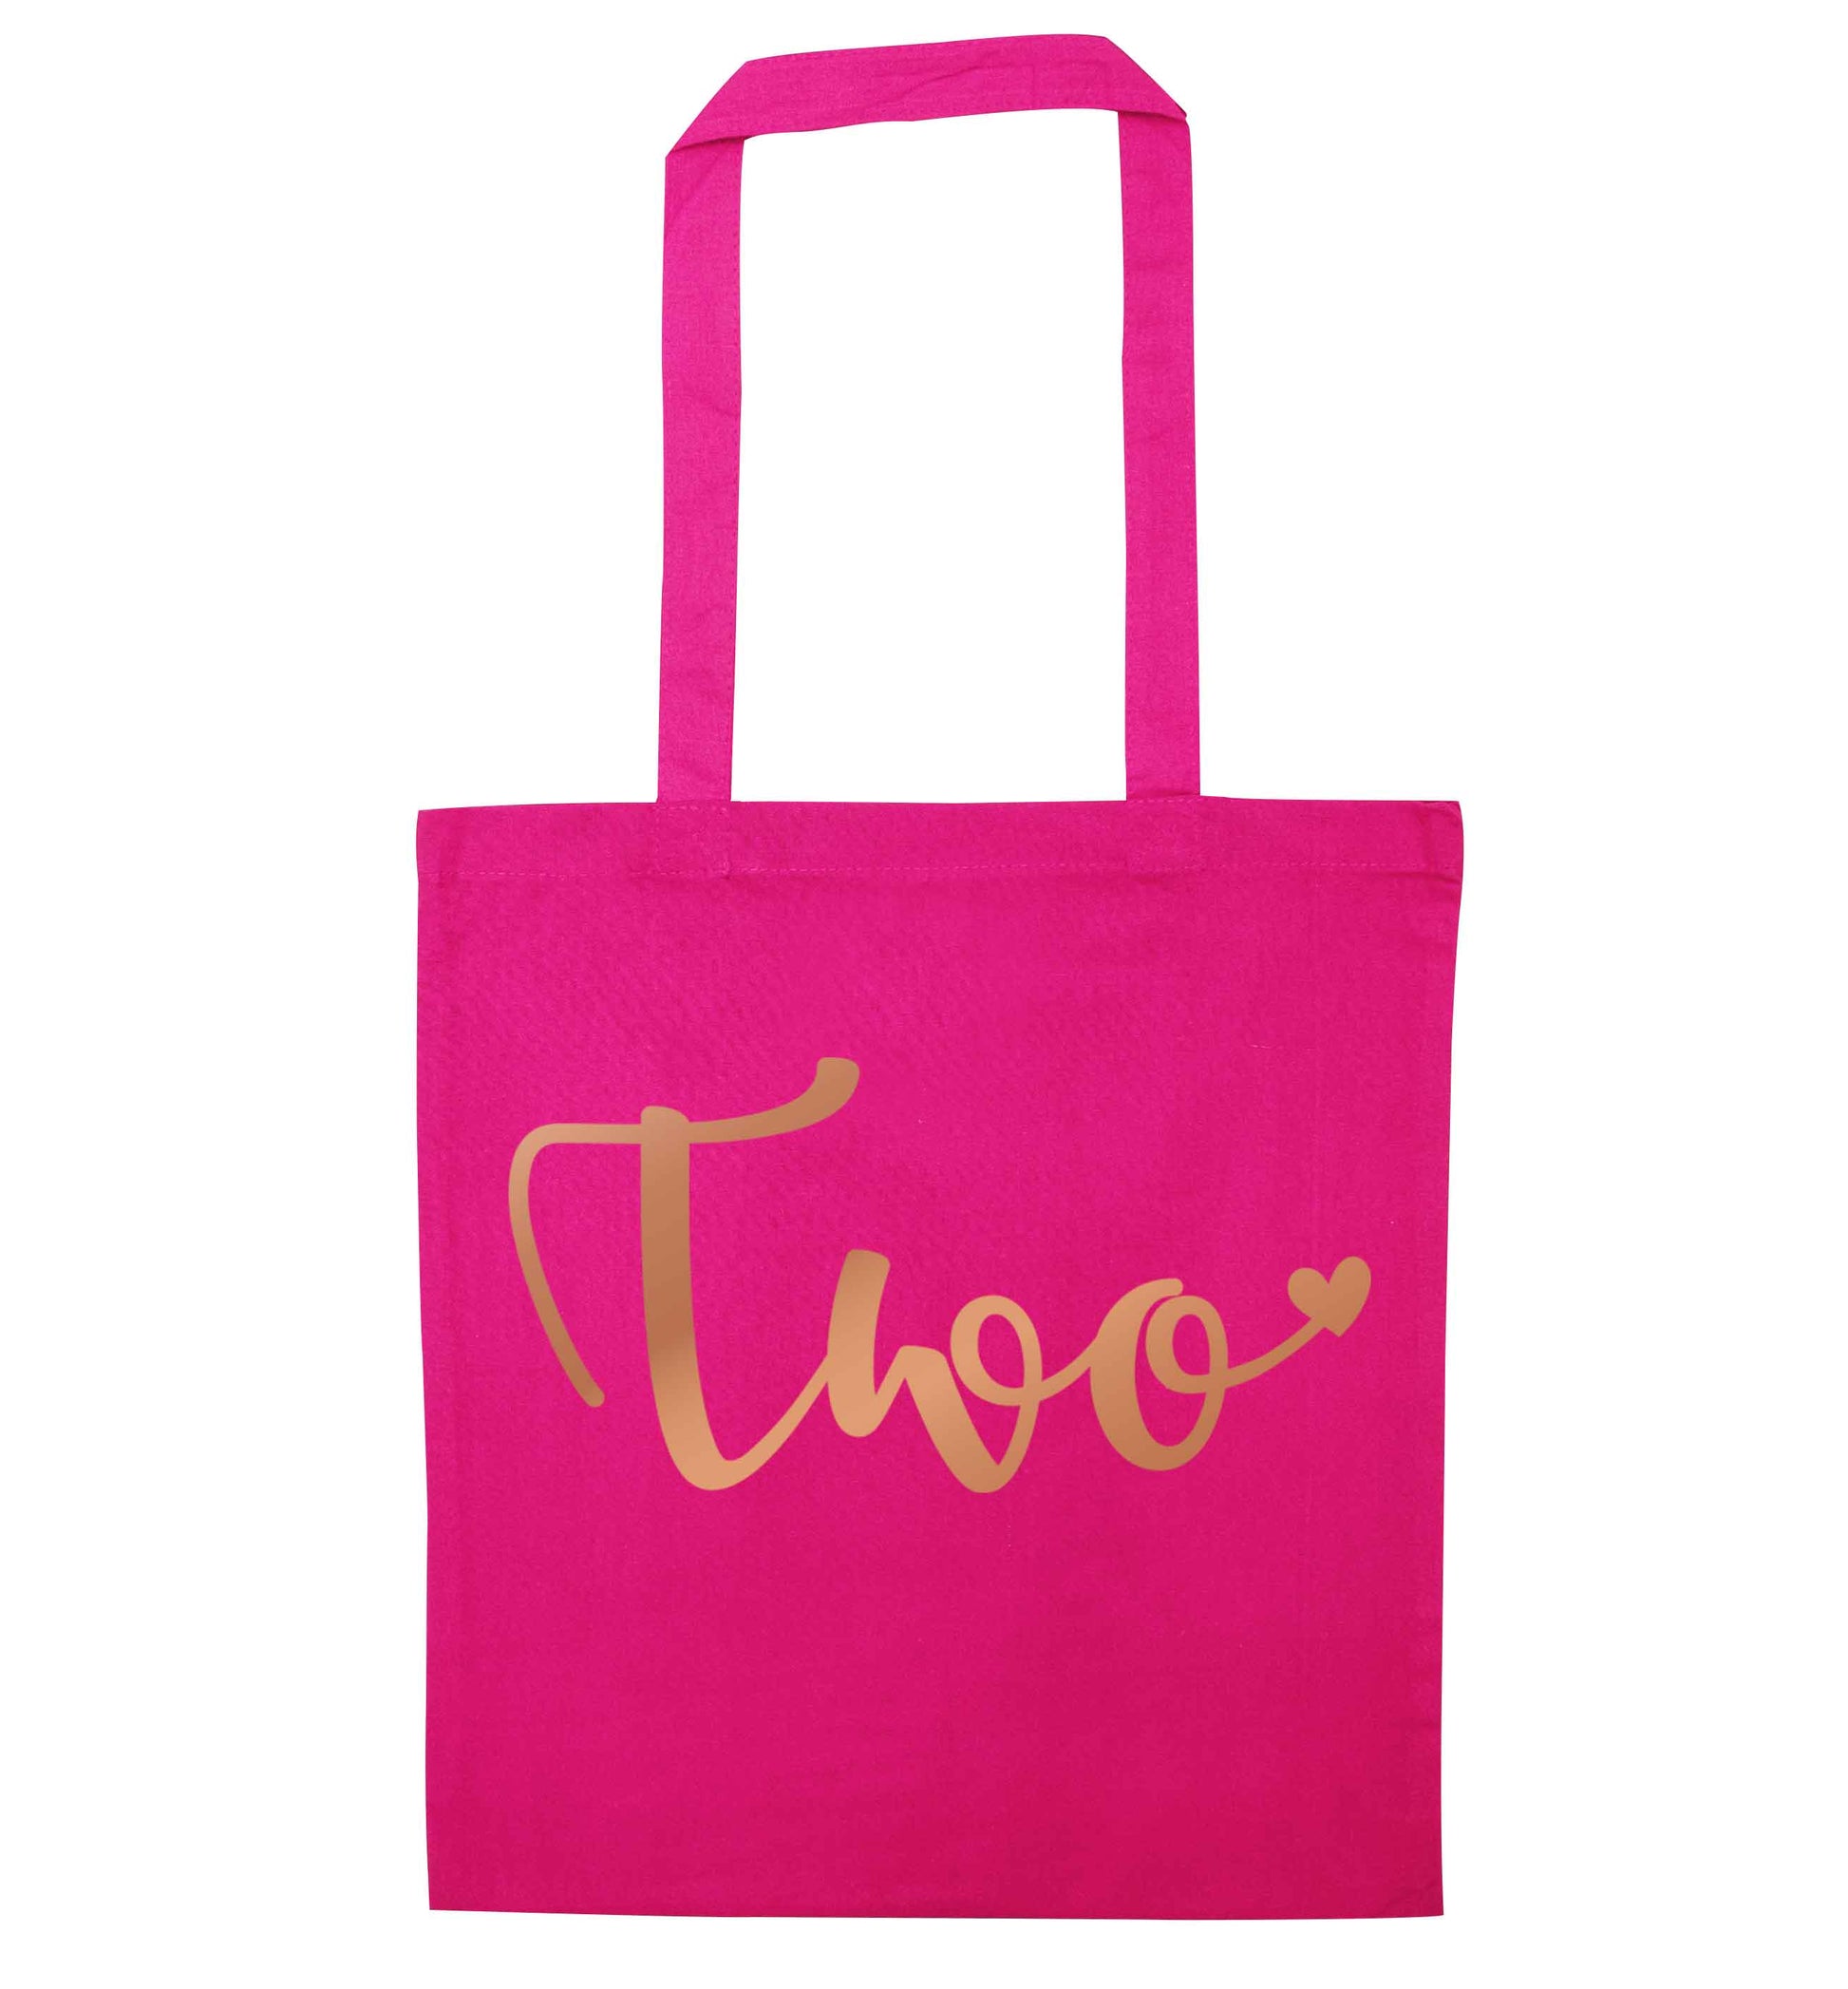 Two rose gold pink tote bag